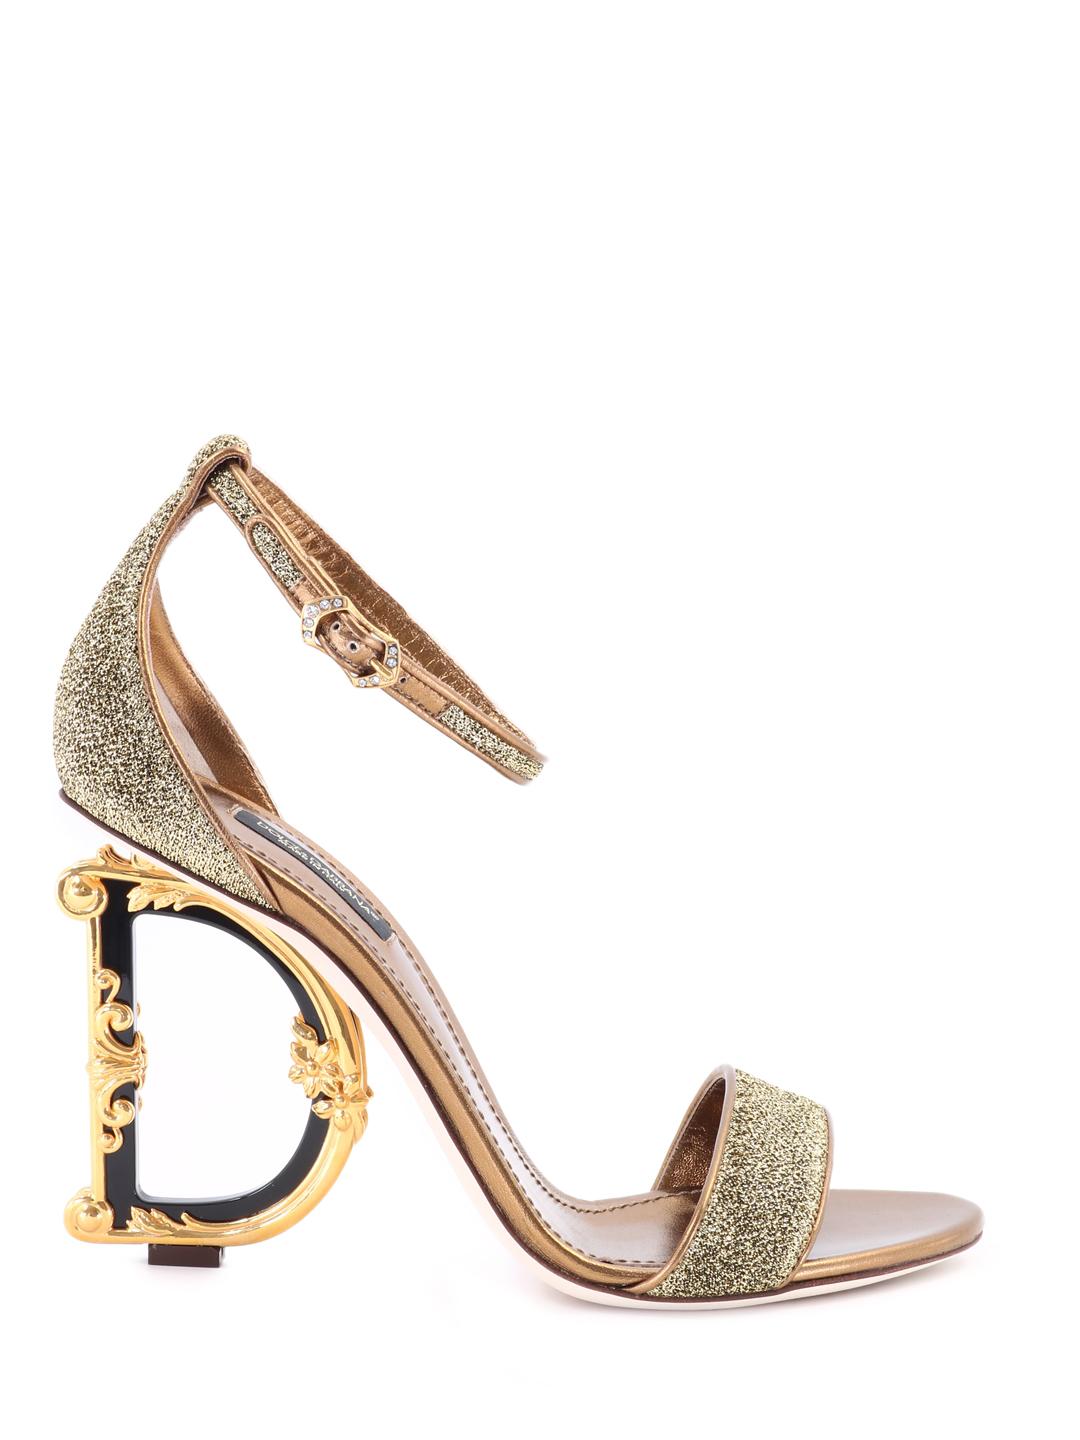 Dolce & Gabbana Baroque Sandal in Gold (Metallic) | Lyst Australia